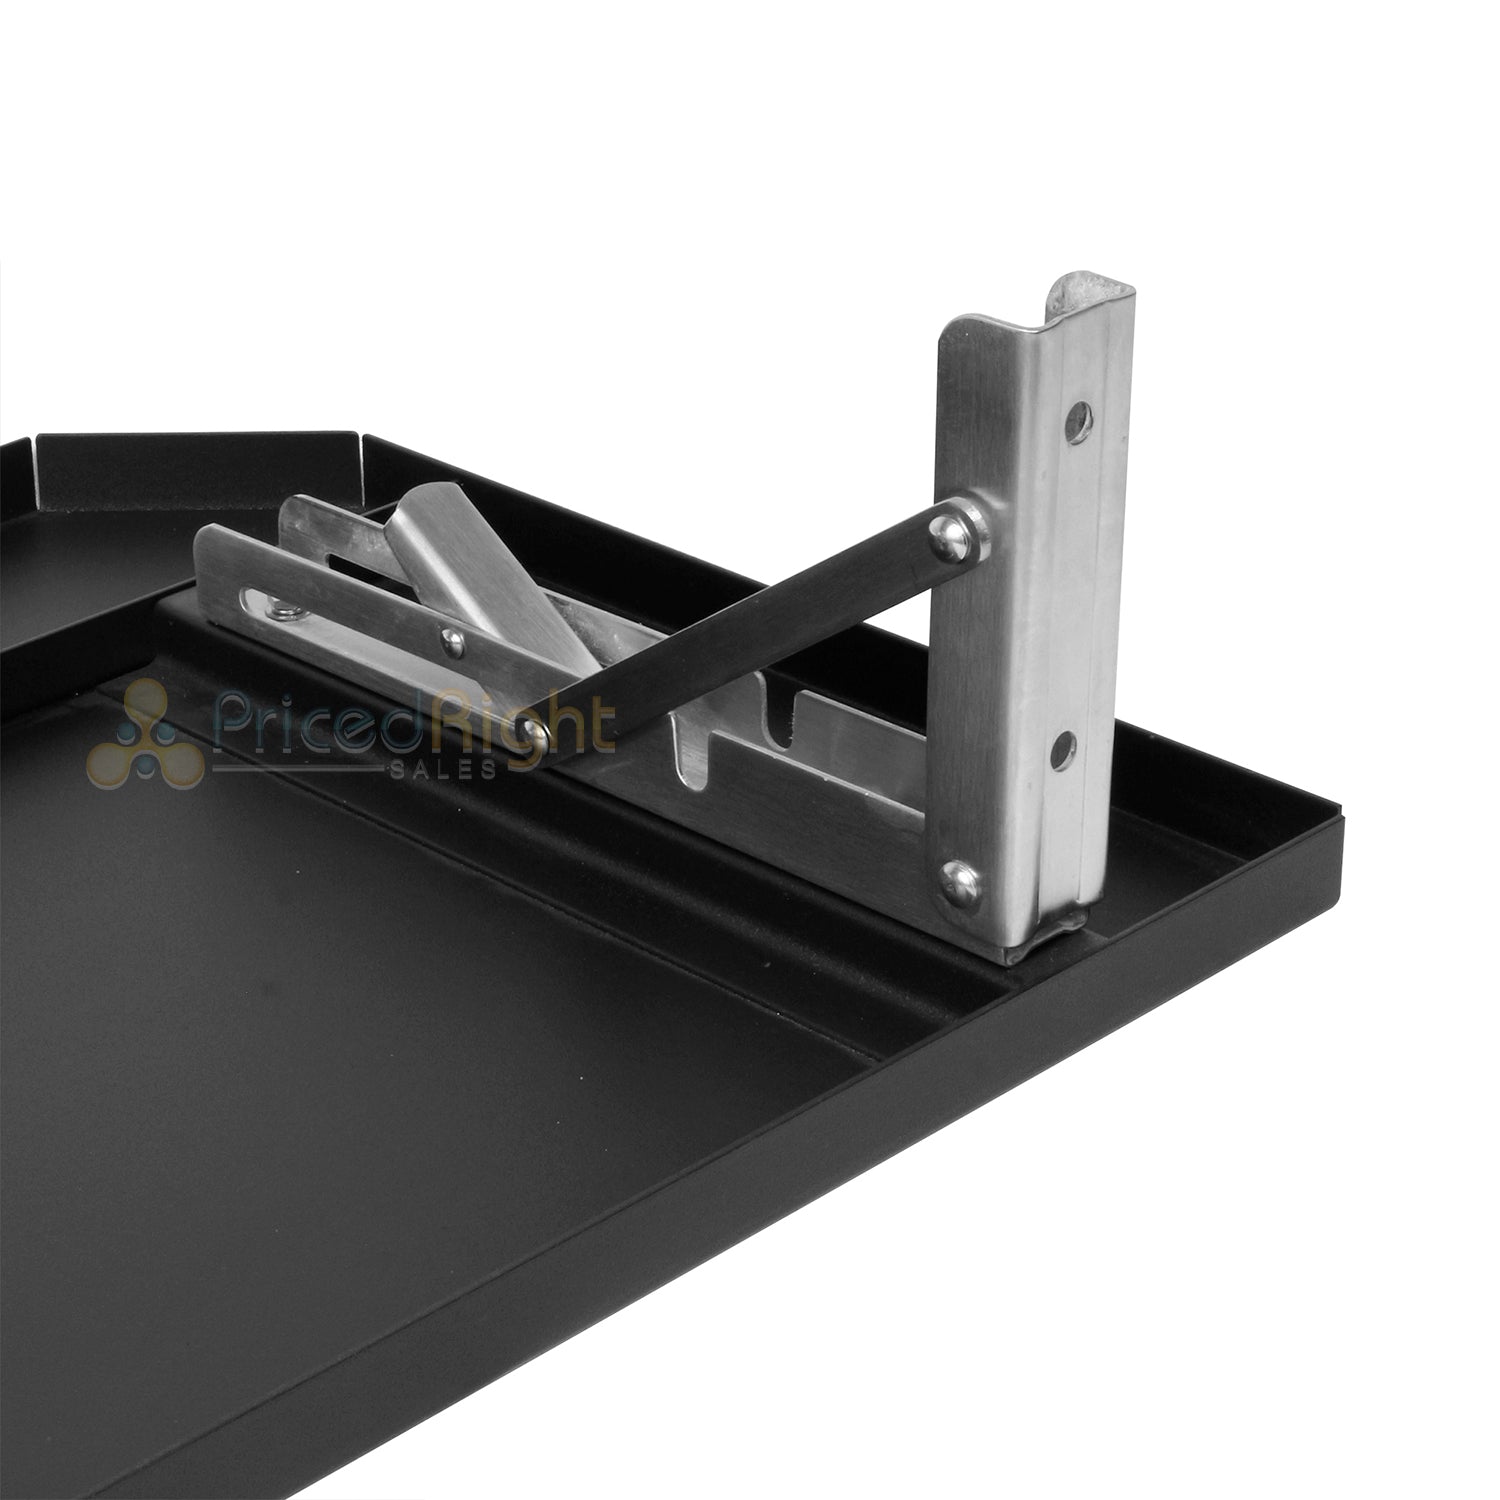 Green Mountain Grills Front Shelf Folding For Ledge, DB Prime, Prime+ GMGP-1267